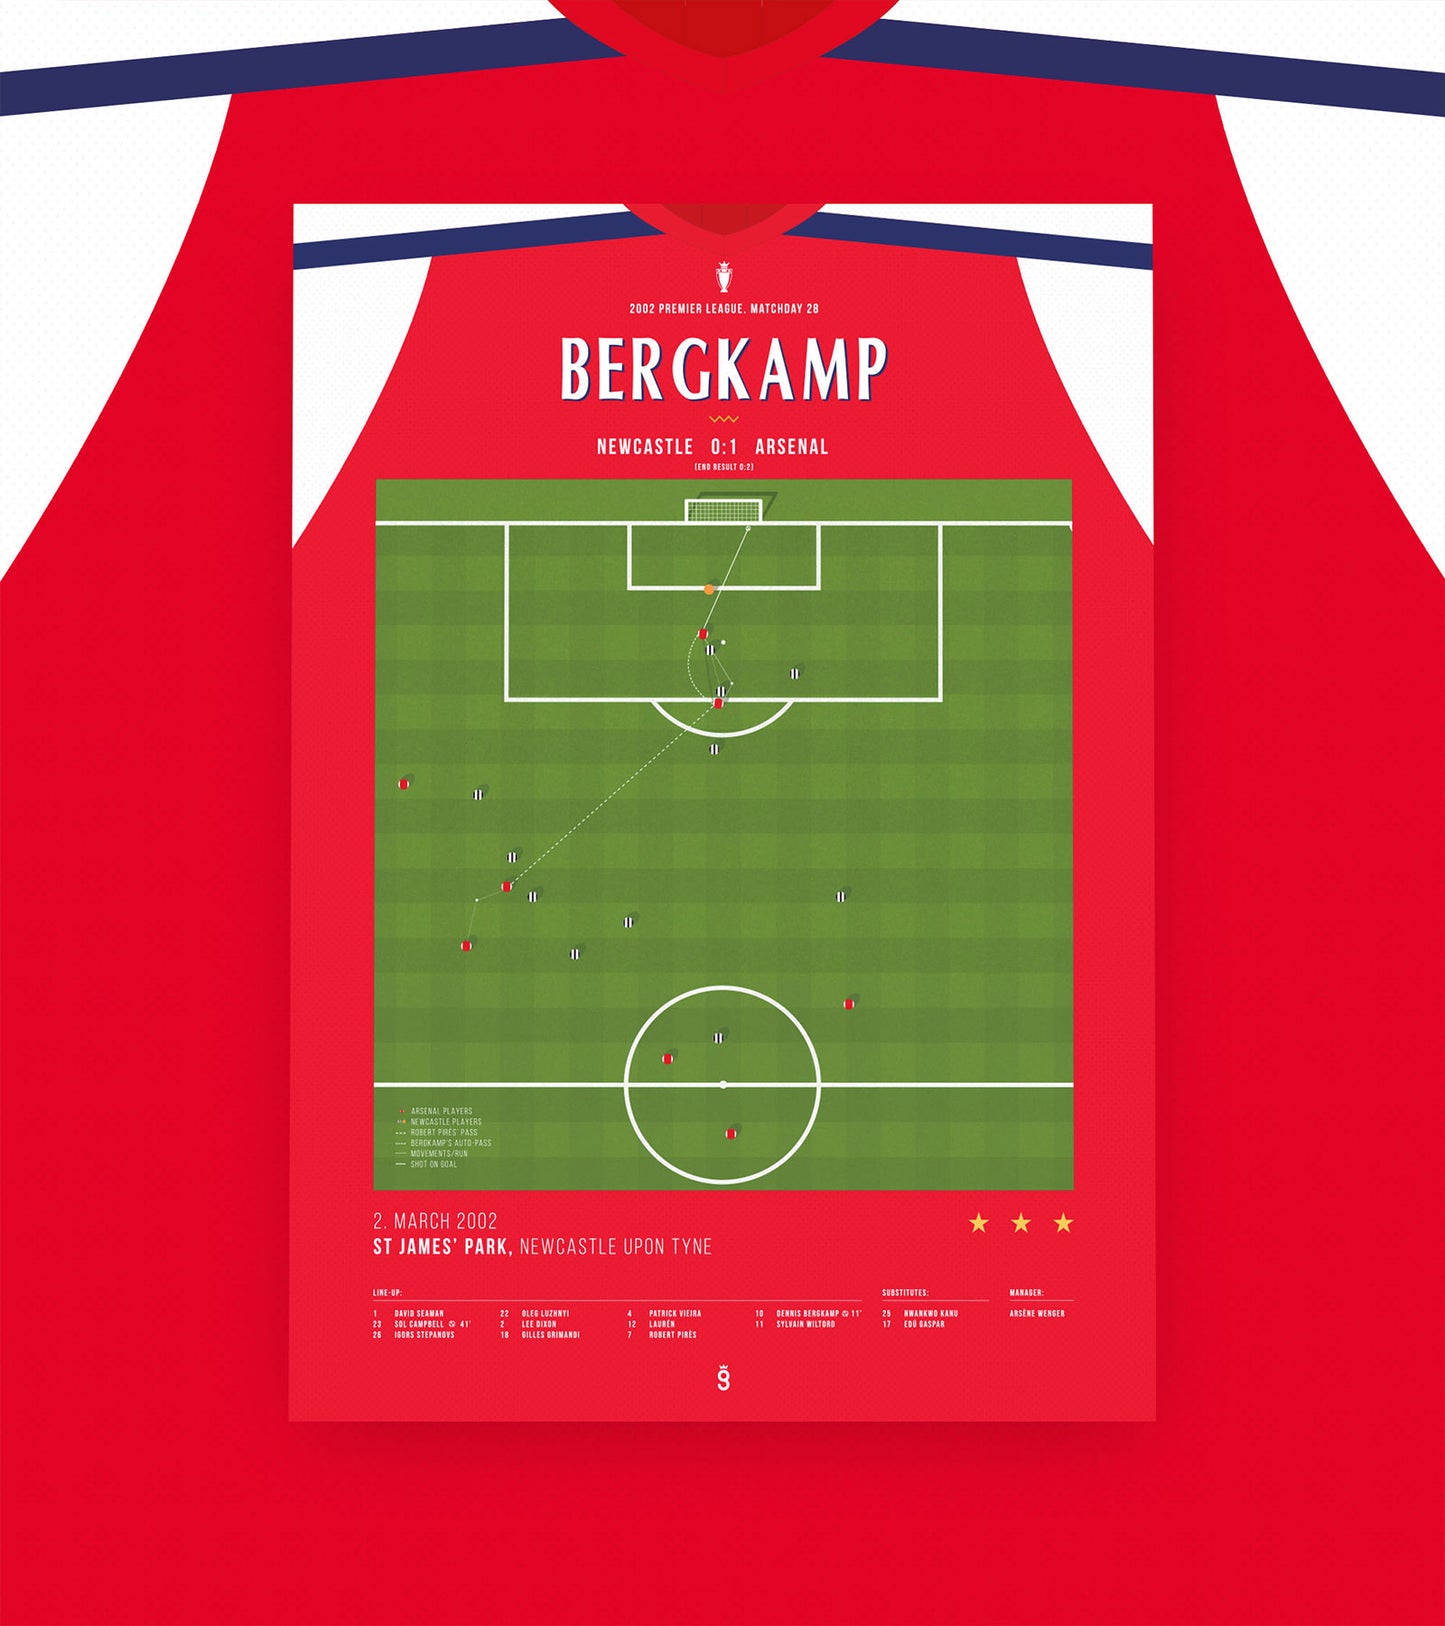 El gol majestuoso de Bergkamp al Newcastle